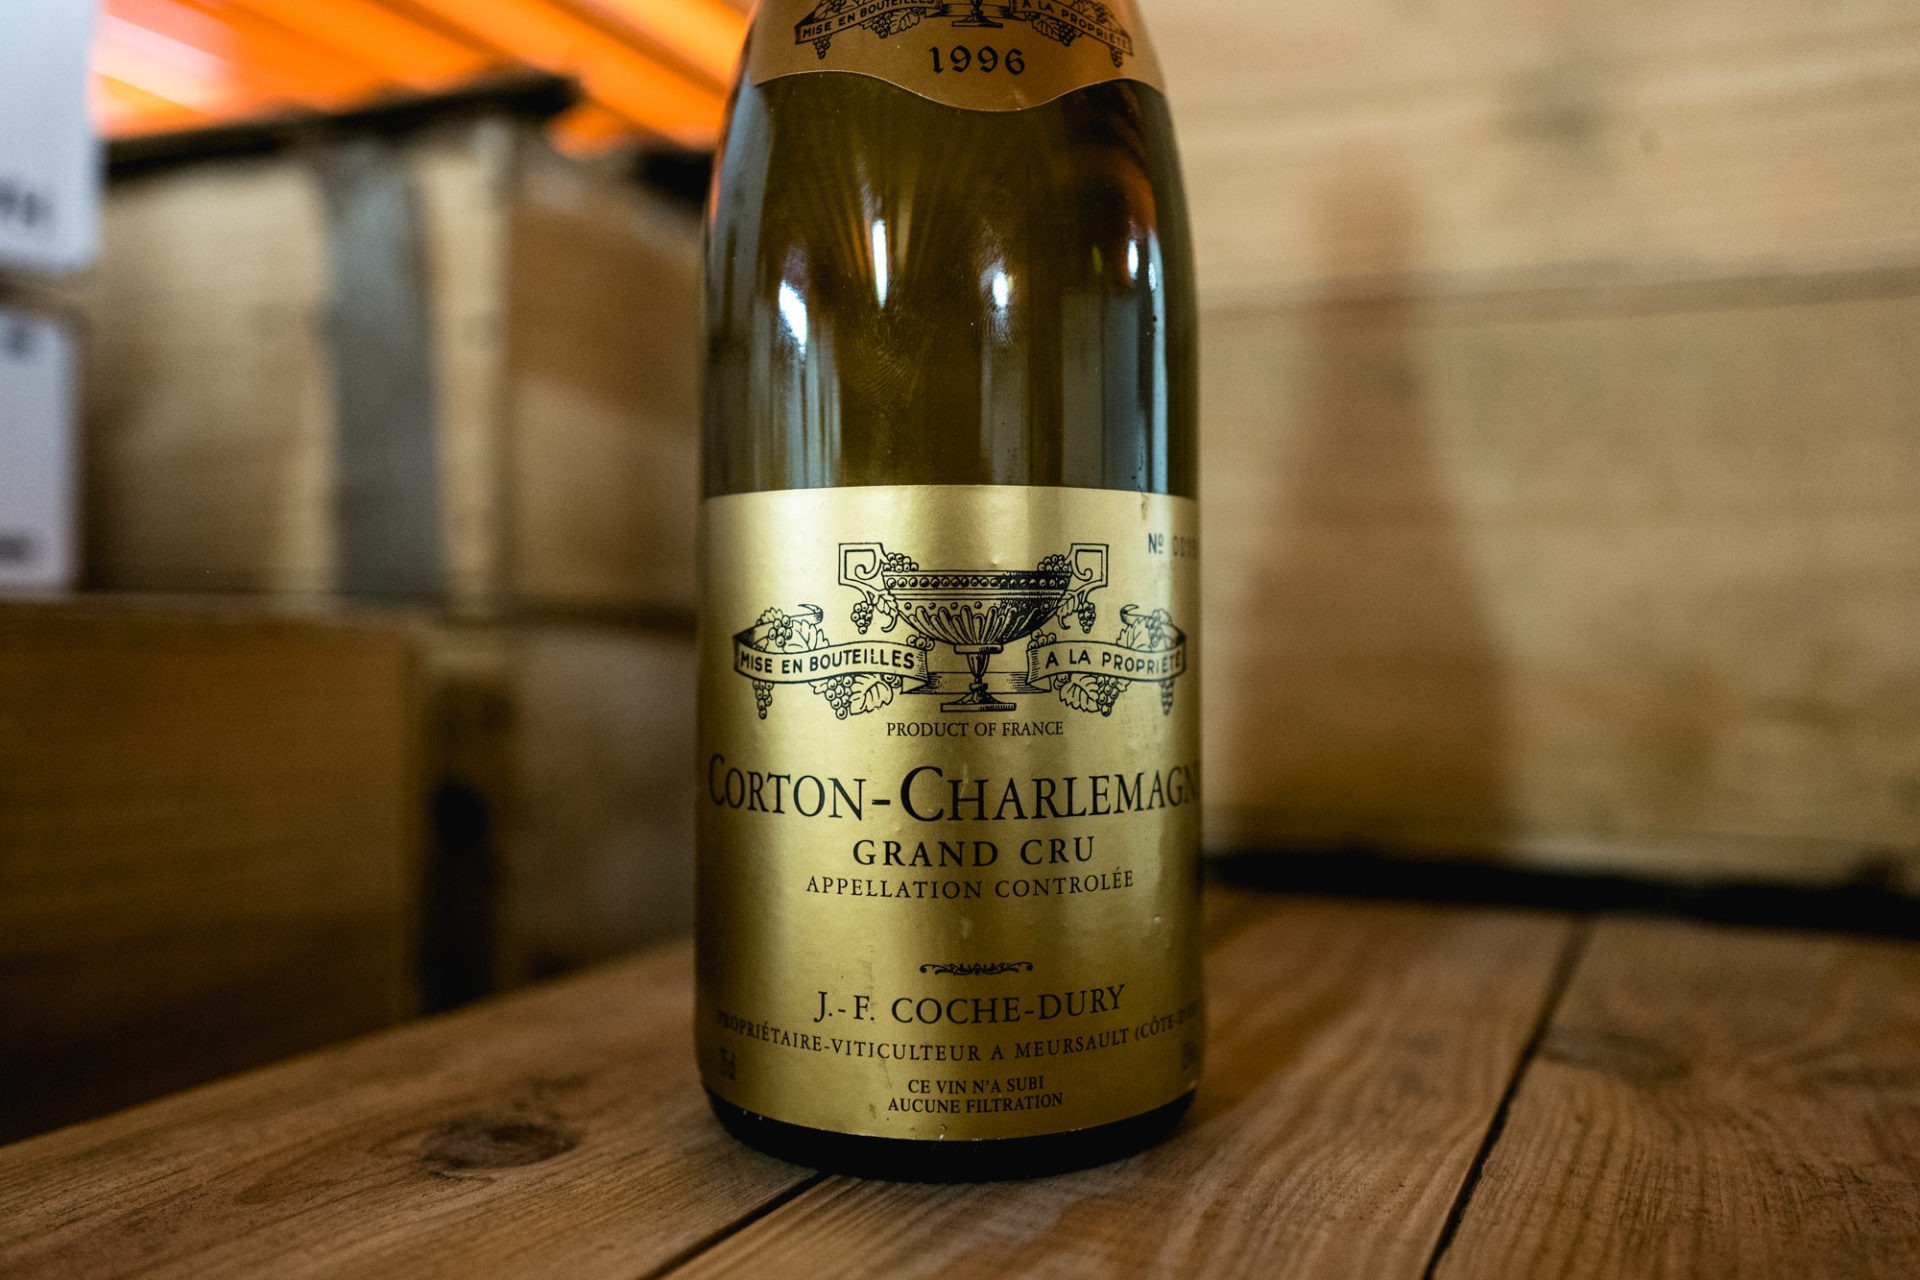 Tajan - Vente de vins et spiritueux du jeudi 25 avril 2019 - Corton Charlemagne Coche Dury 1996